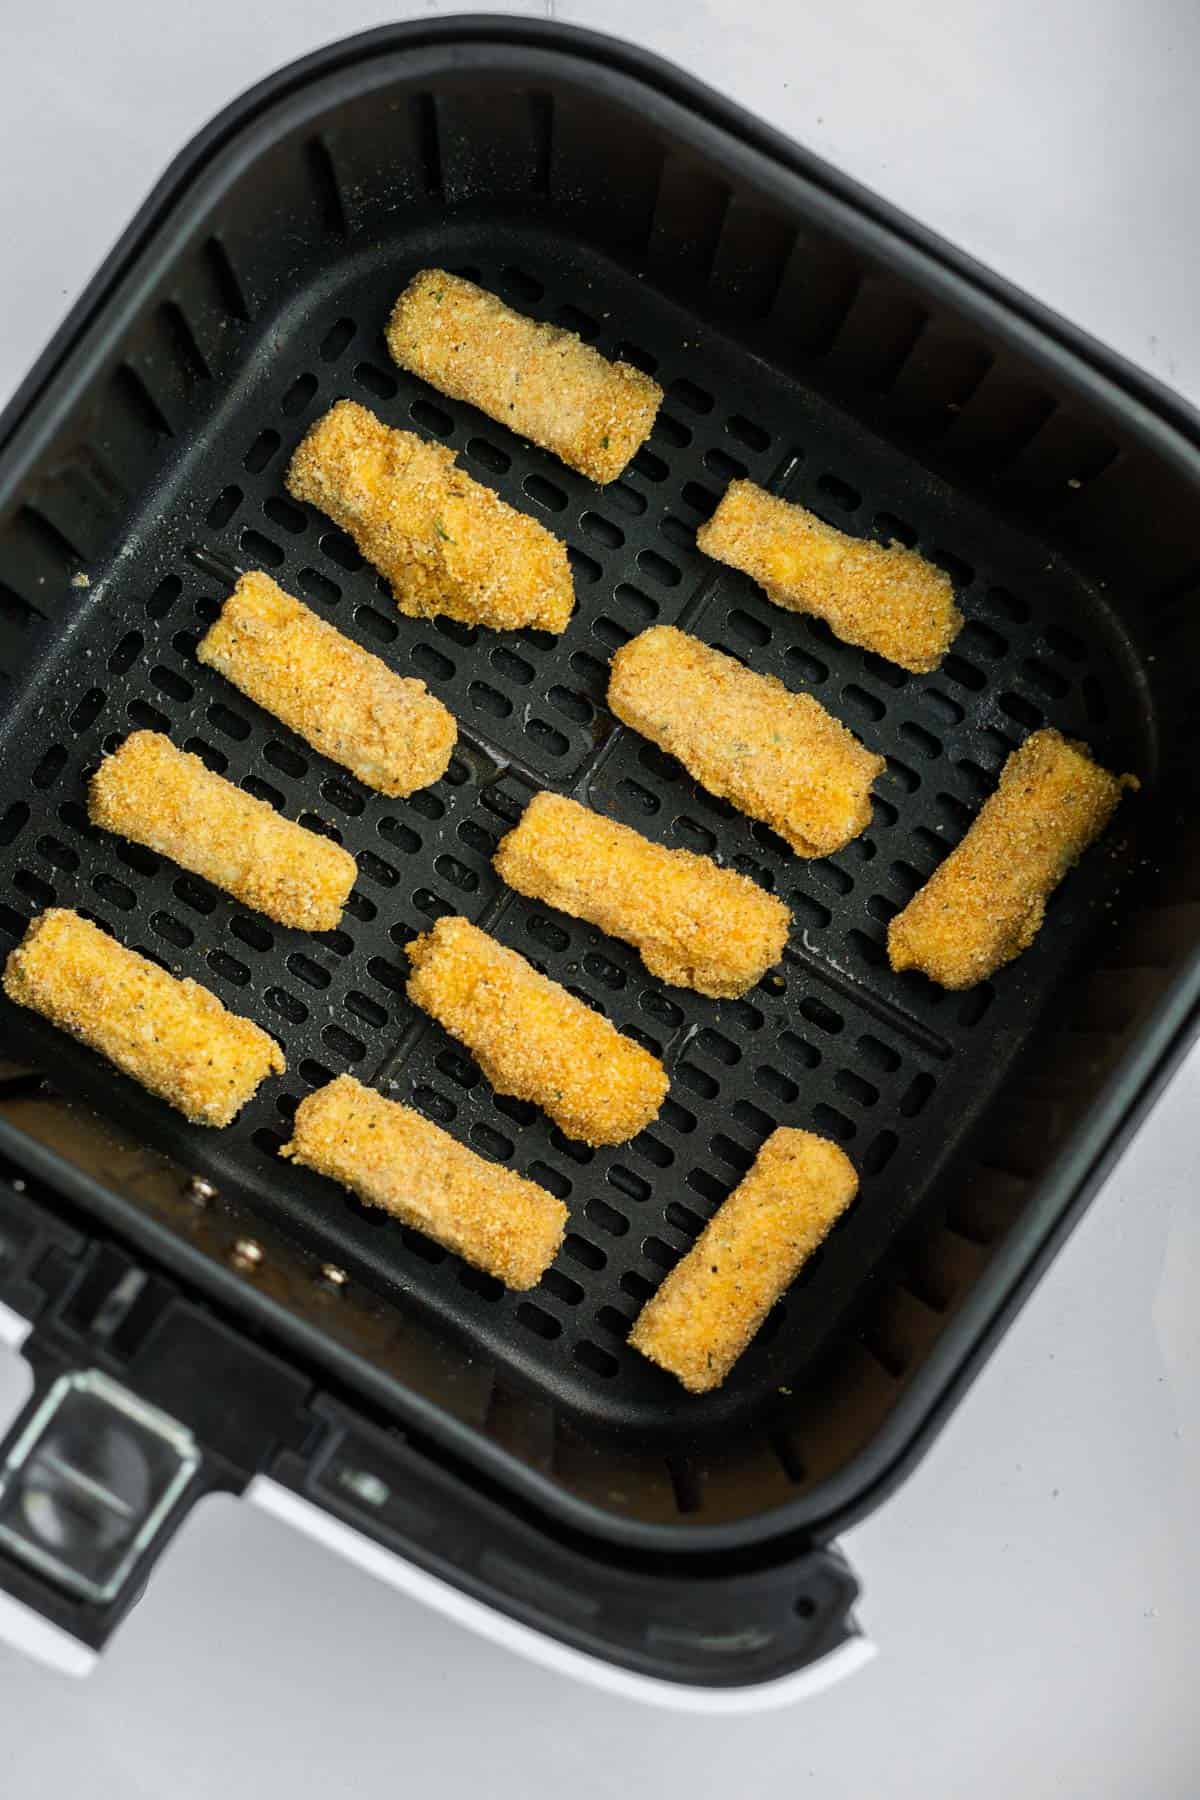 homemade mozzarella sticks in air fryer basket.